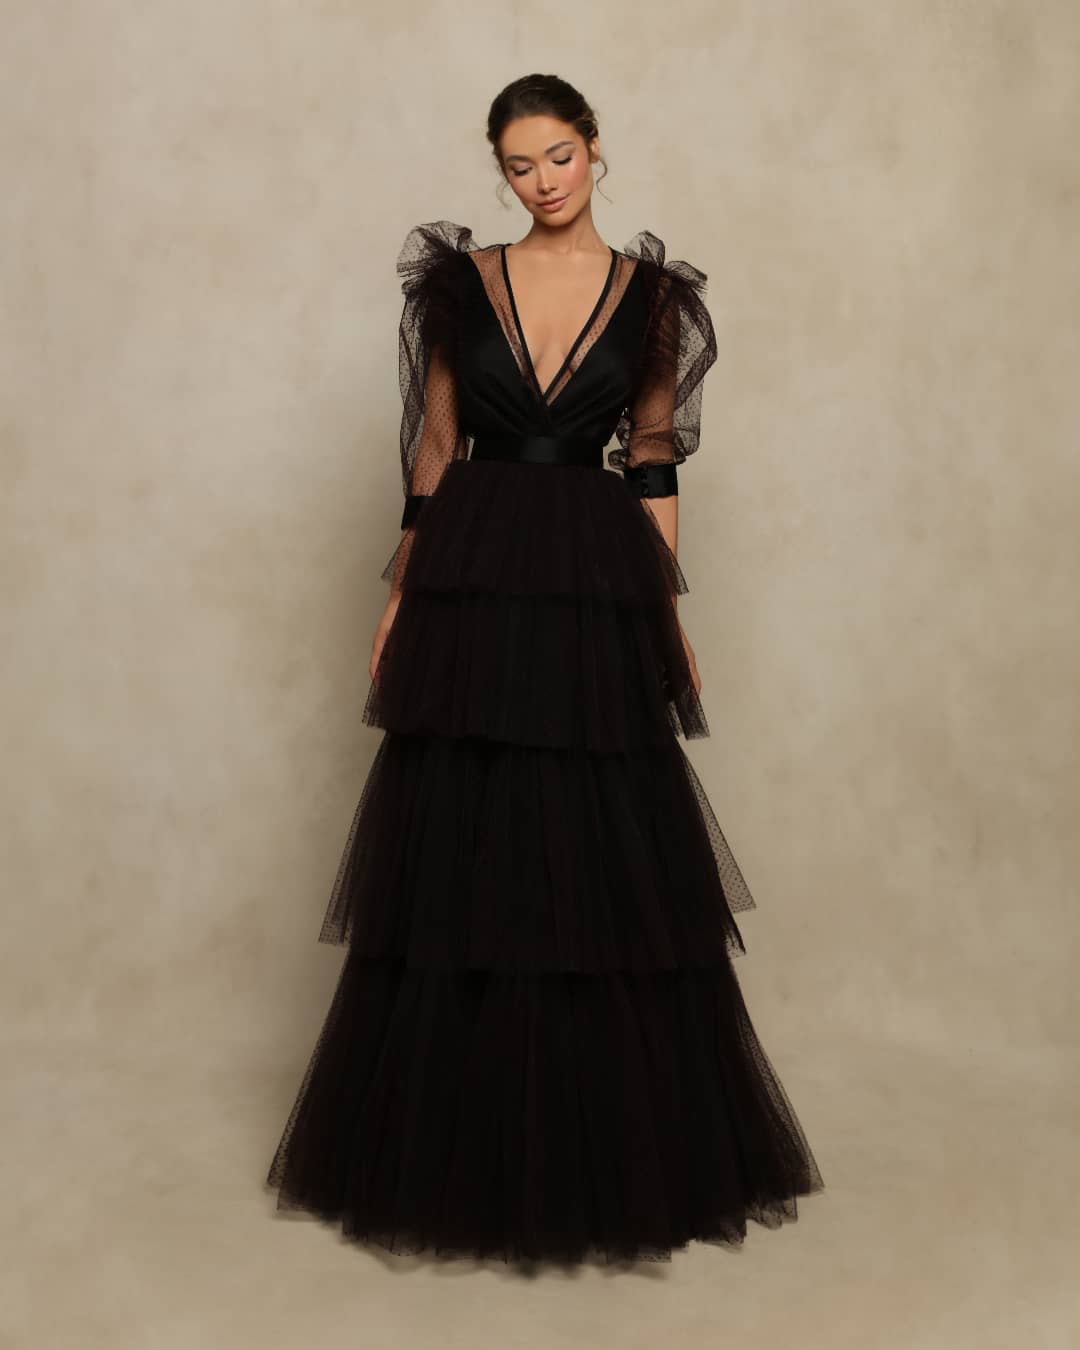 elegant black wedding dresses ruffled skirt sleeves illusion back tarikedizofficial